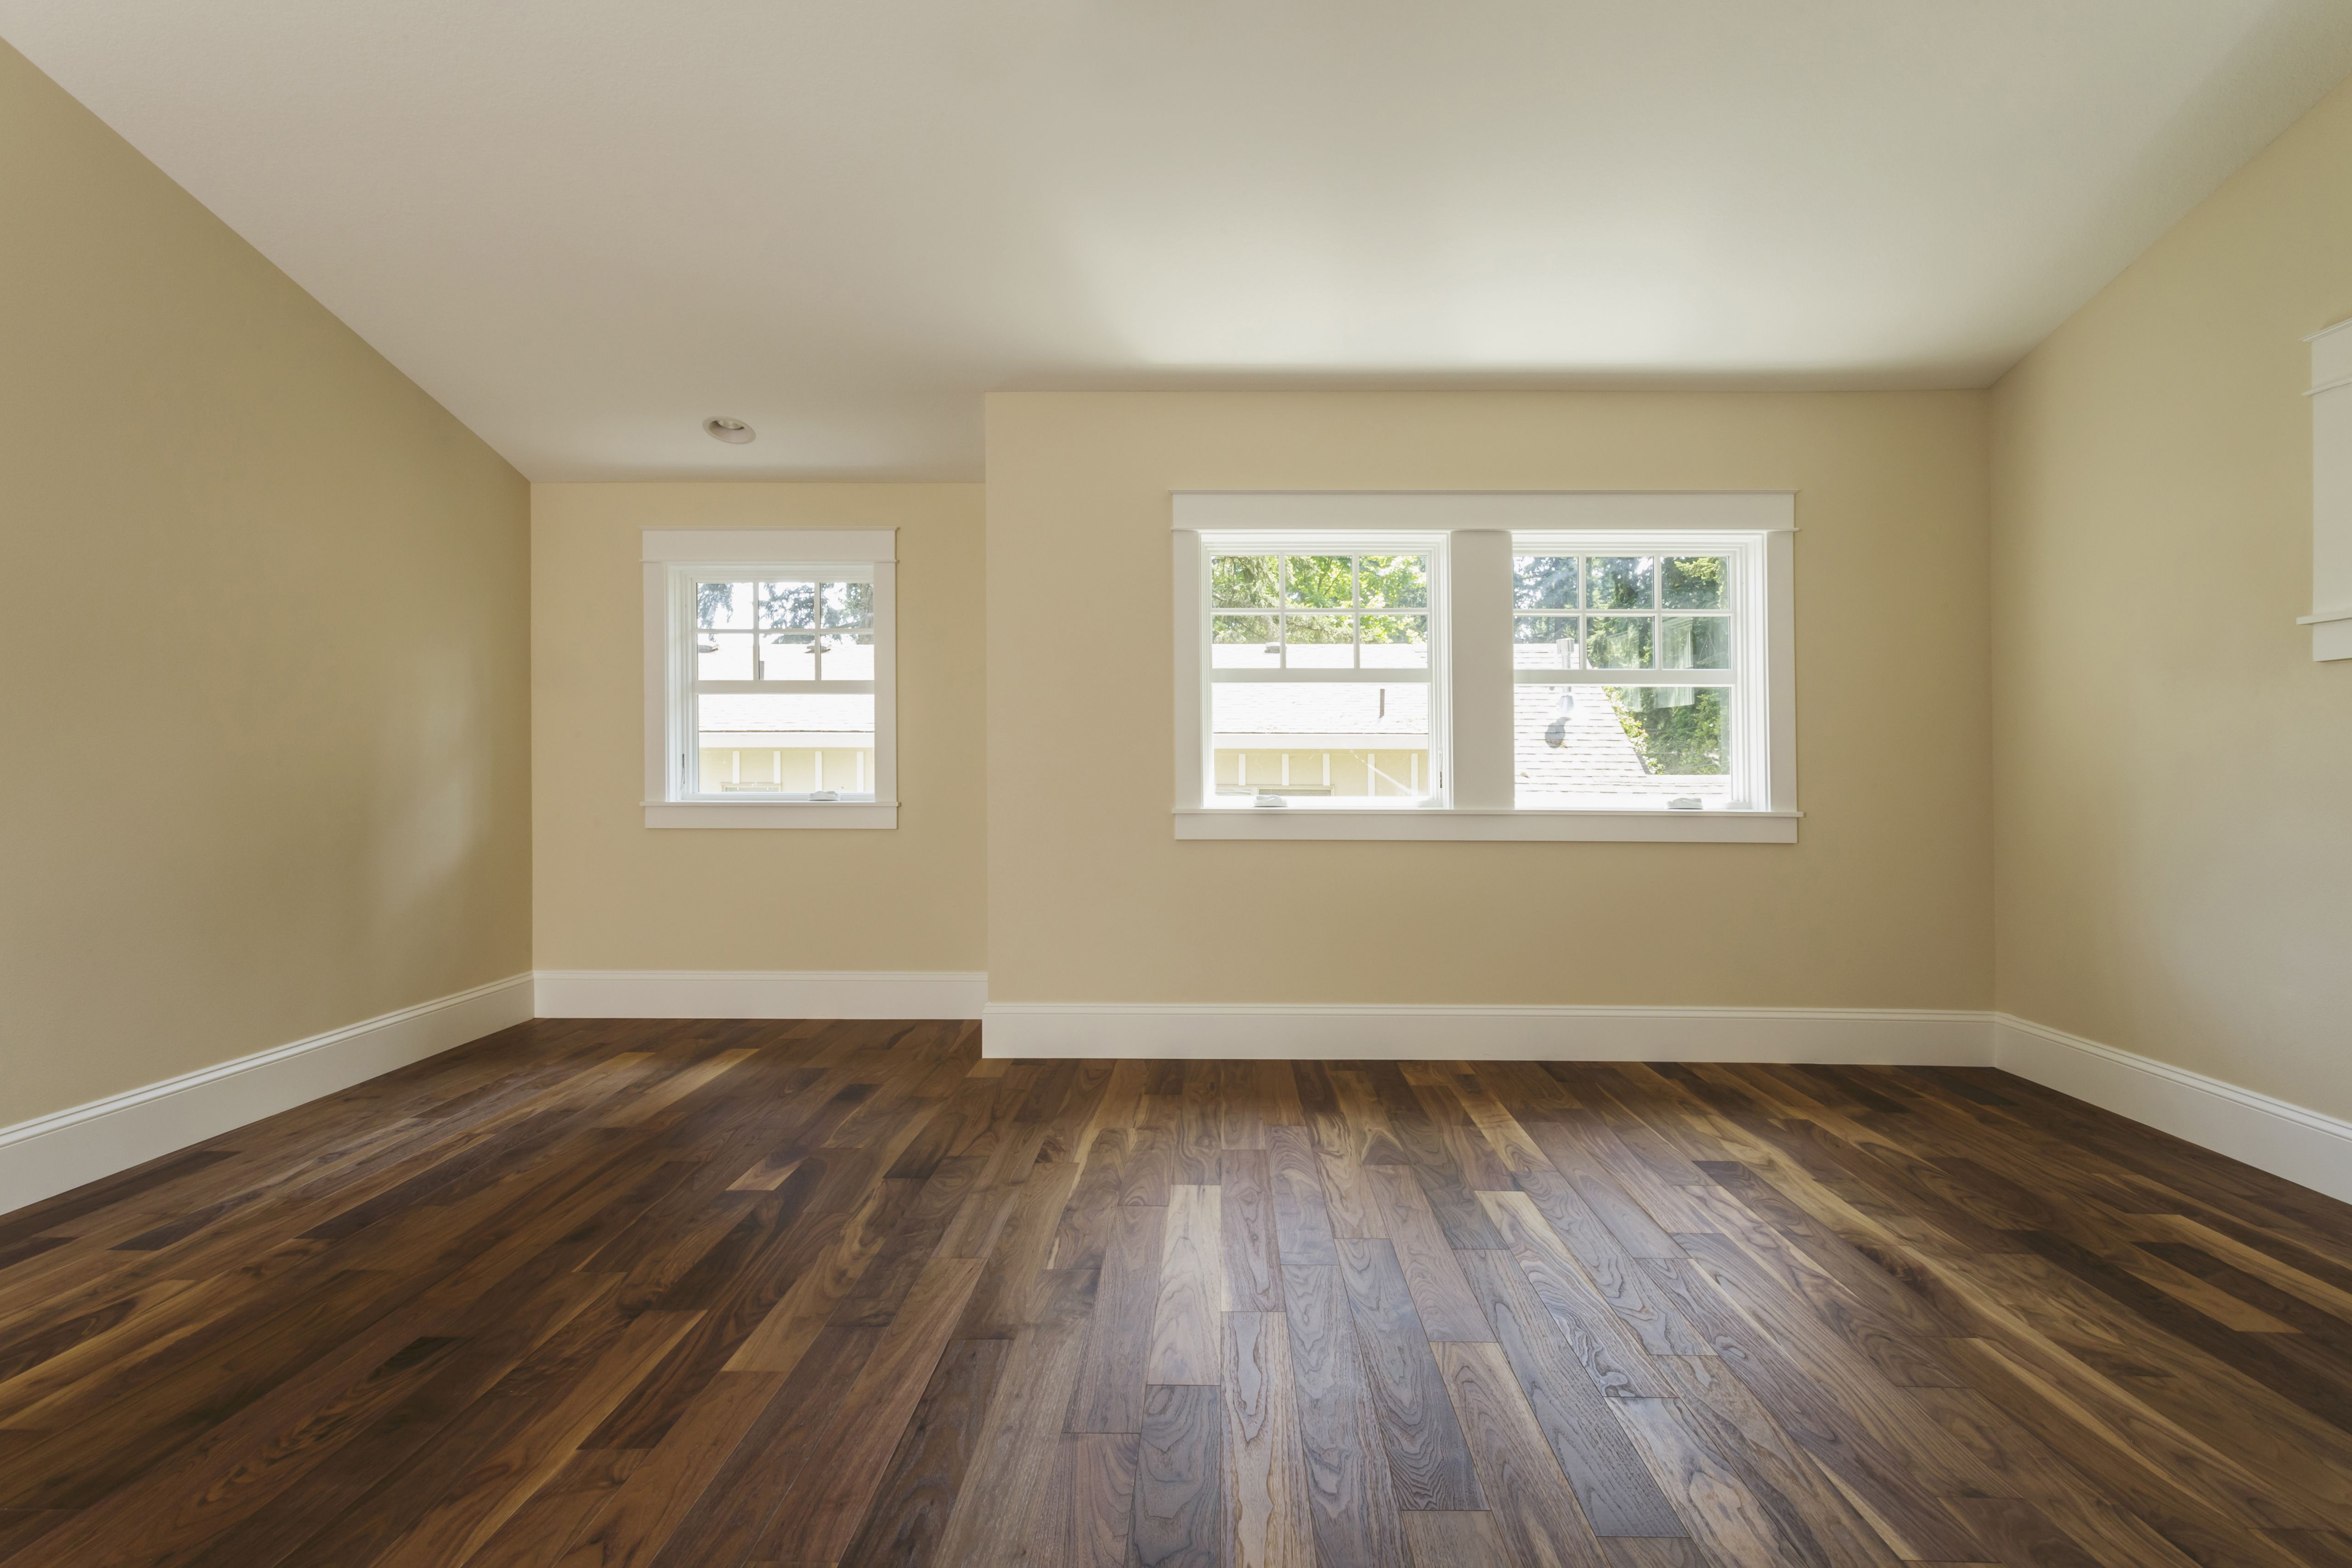 1 800 hardwood floor of its easy and fast to install plank vinyl flooring with wooden floor in empty bedroom 482143001 588bd5f45f9b5874eebd56e9